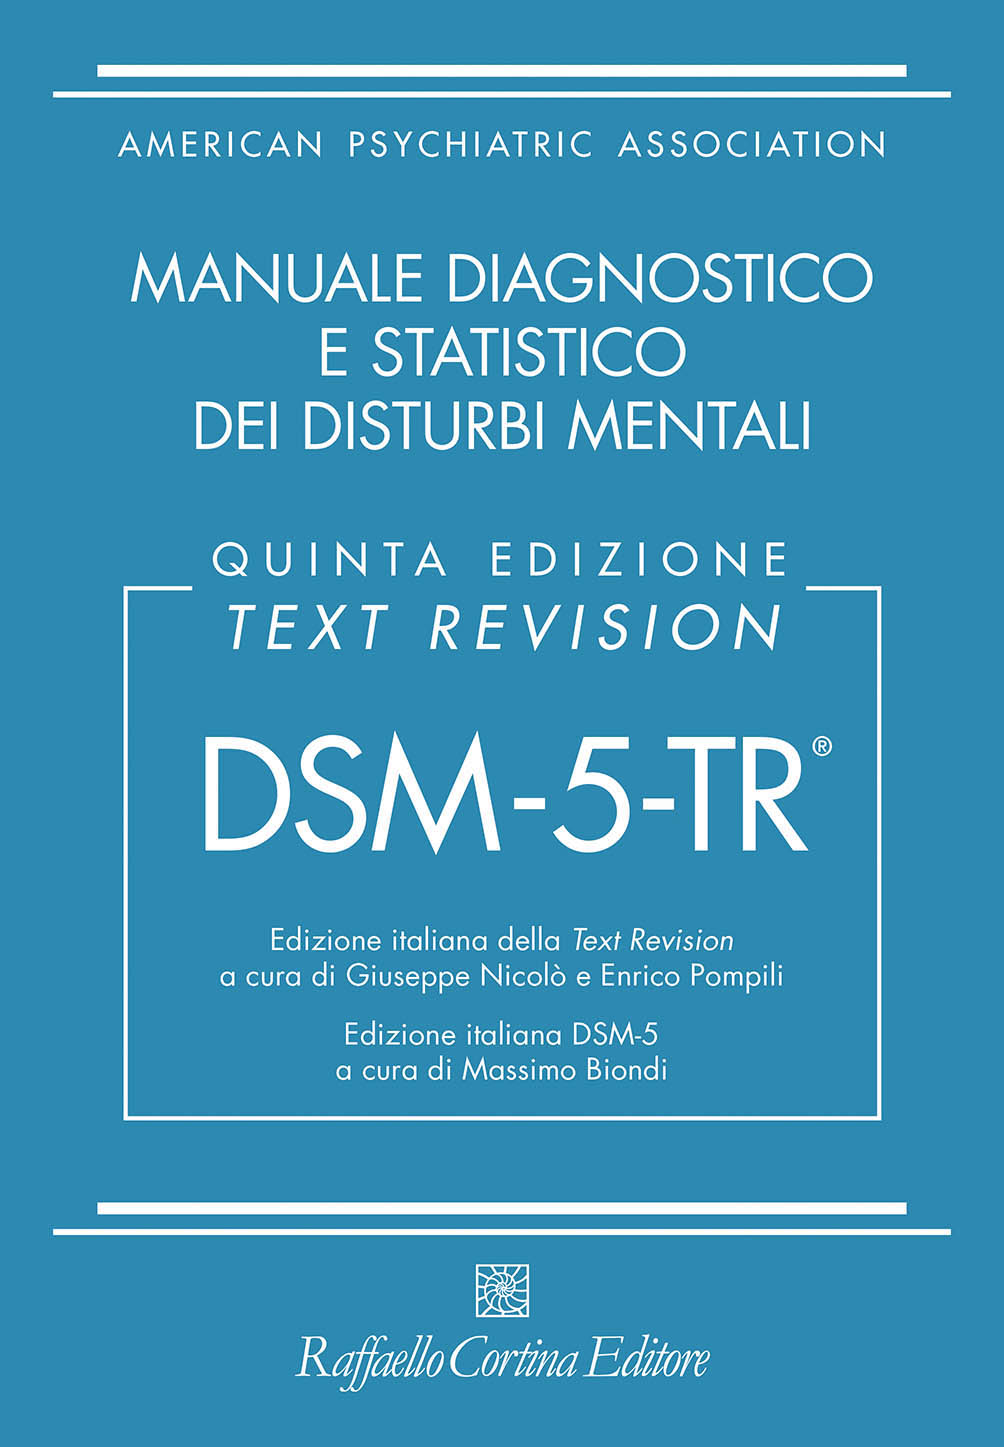 https://raffaellocortina.mediabiblos.it/archivio/DSM-5-TR_Manuale%20Brosura%20e%20Cartonato-S.jpg